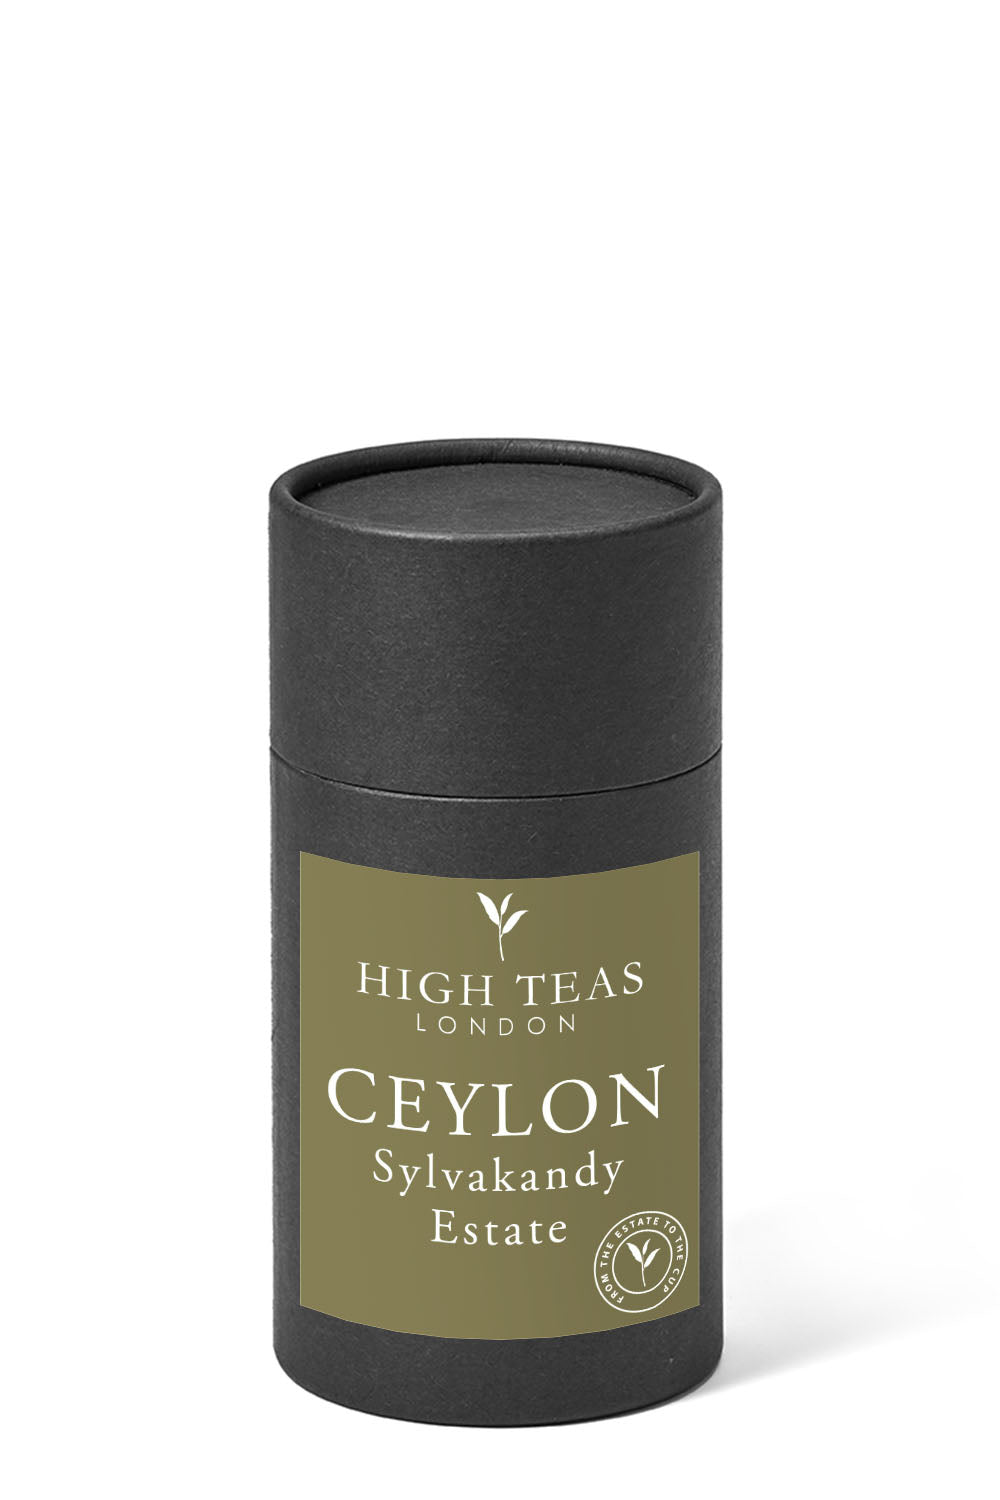 Kandy OP - Sylvakandy Estate-60g gift-Loose Leaf Tea-High Teas